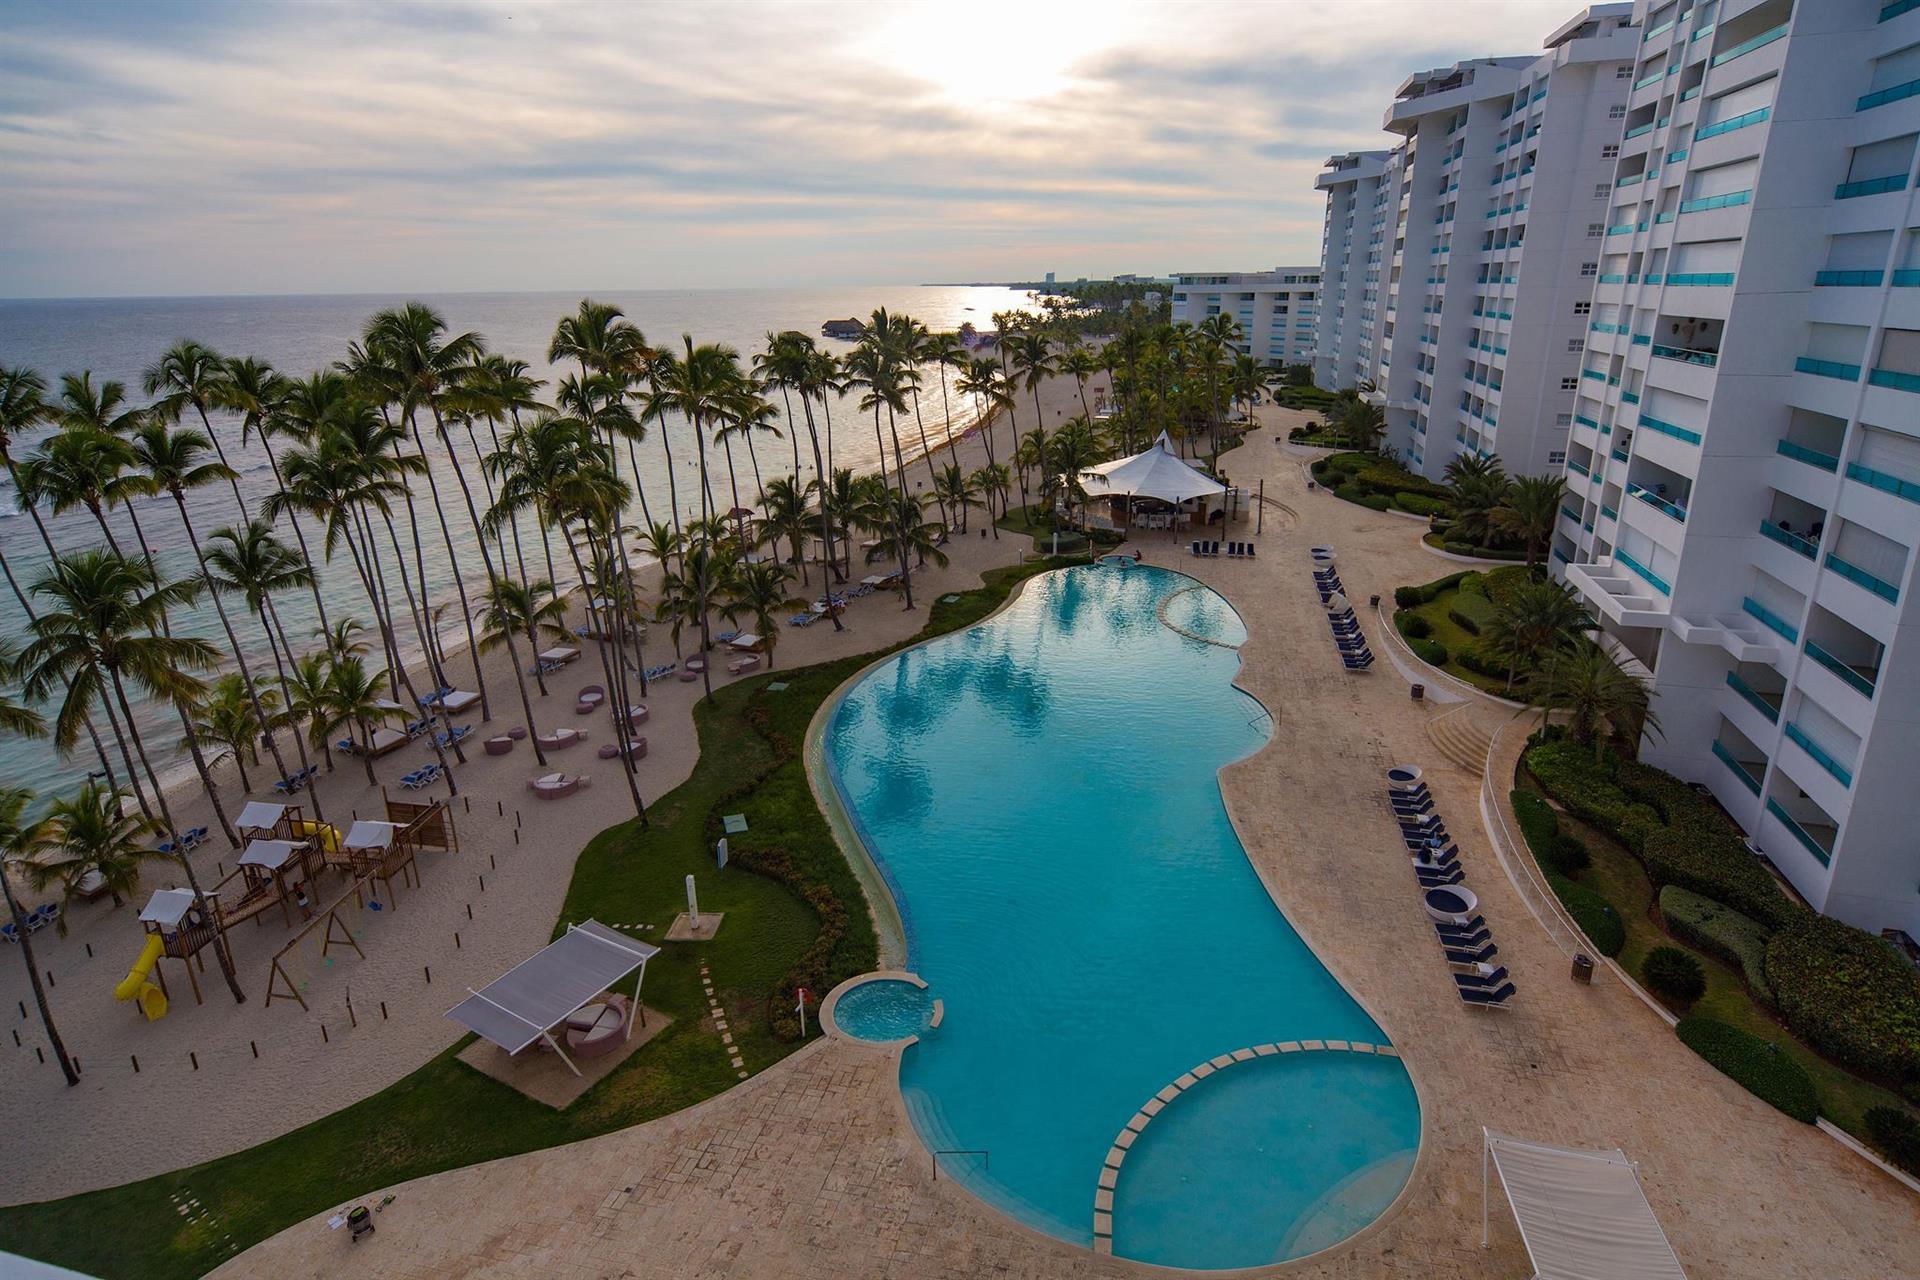 Costa caribe beach resort 3. Gran Caribe Neptuno & Triton 3*. Costa Caribe Beach Hotel Resort 4 Венесуэла. Costa Caribe Beach Hotel Resort 3 Венесуэла.